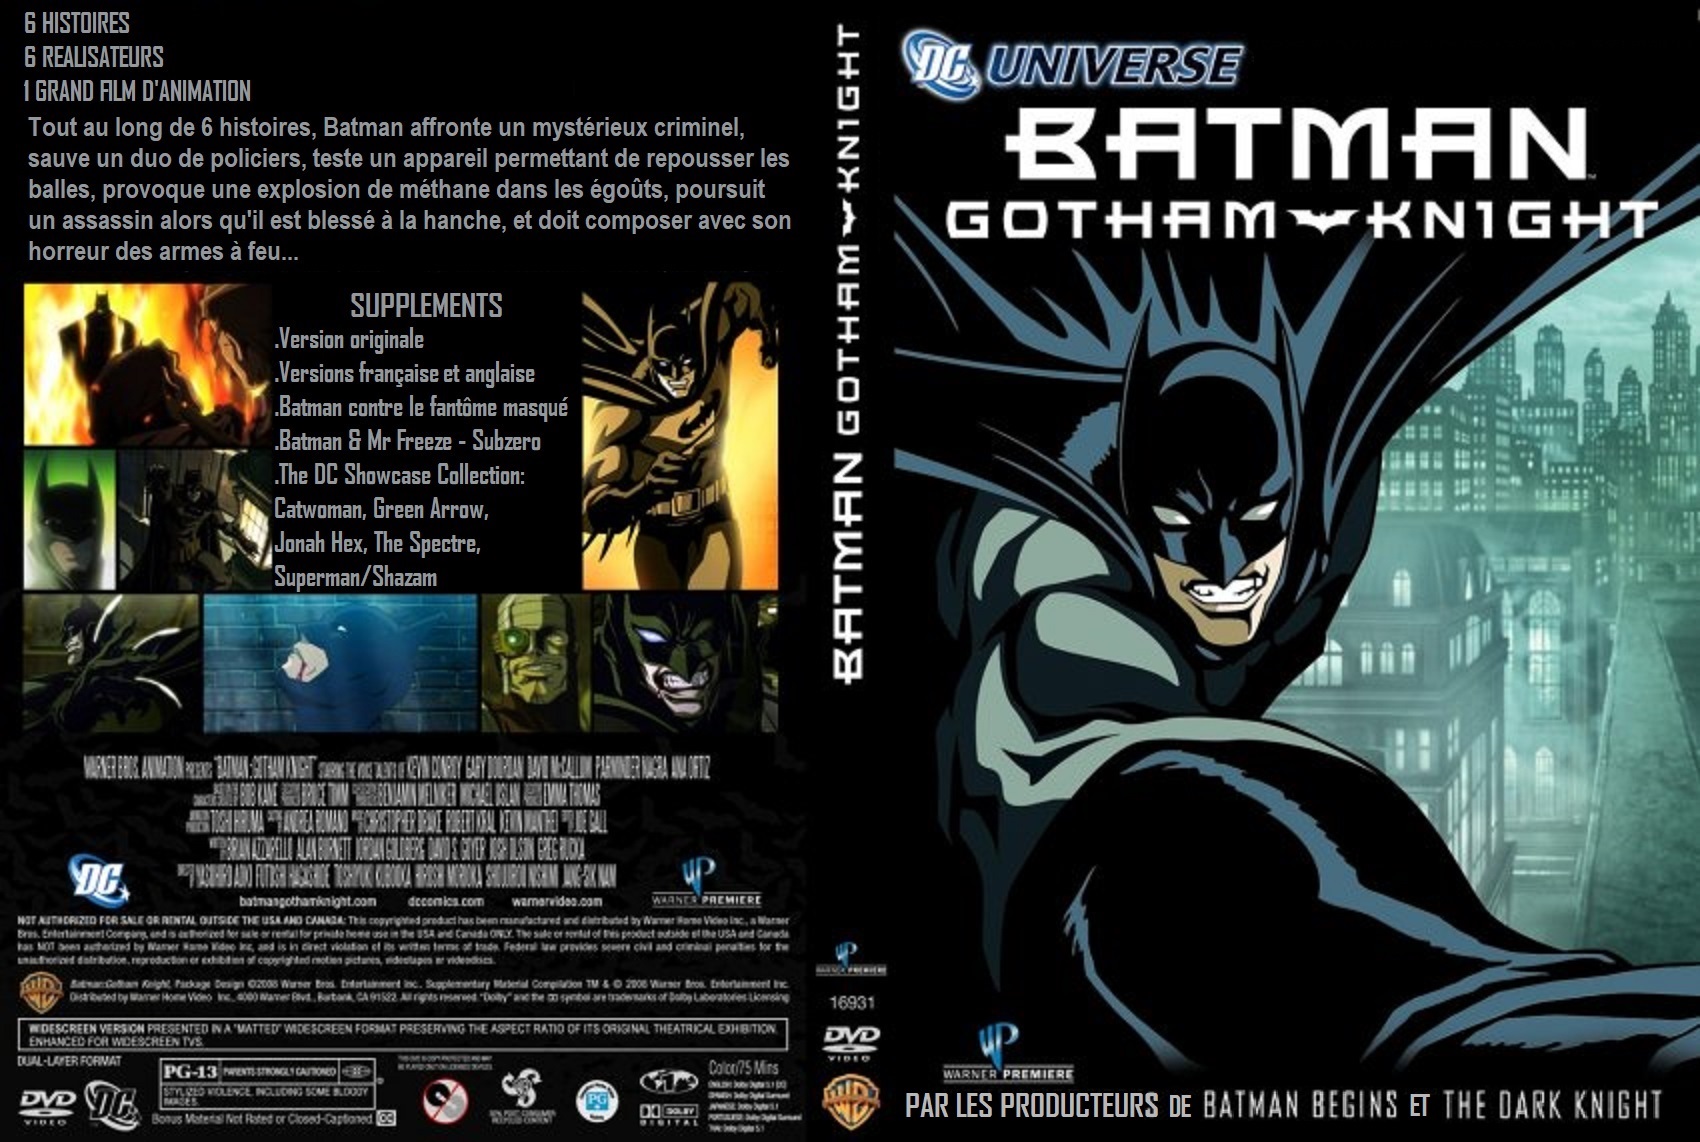 Jaquette DVD Batman Gotham Knight custom